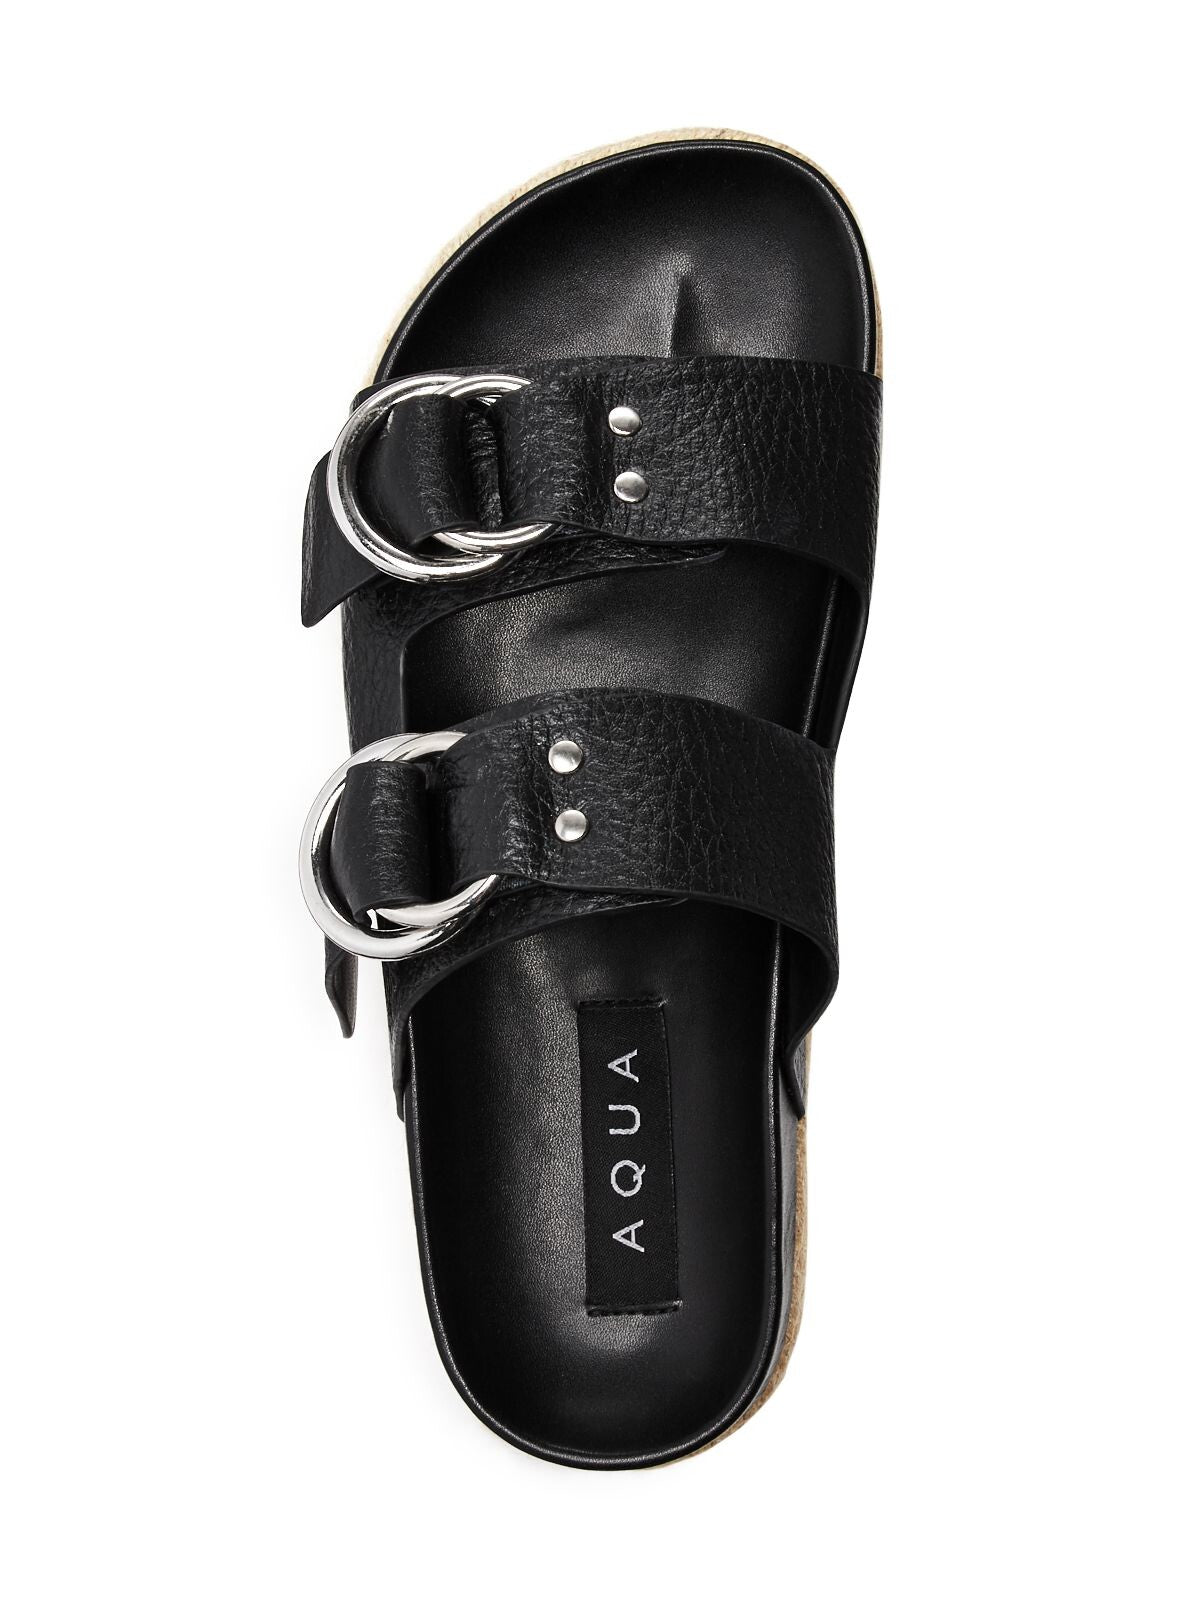 AQUA Womens Black Buckle Accent Treaded Kai Round Toe Platform Slip On Leather Espadrille Shoes 9 M